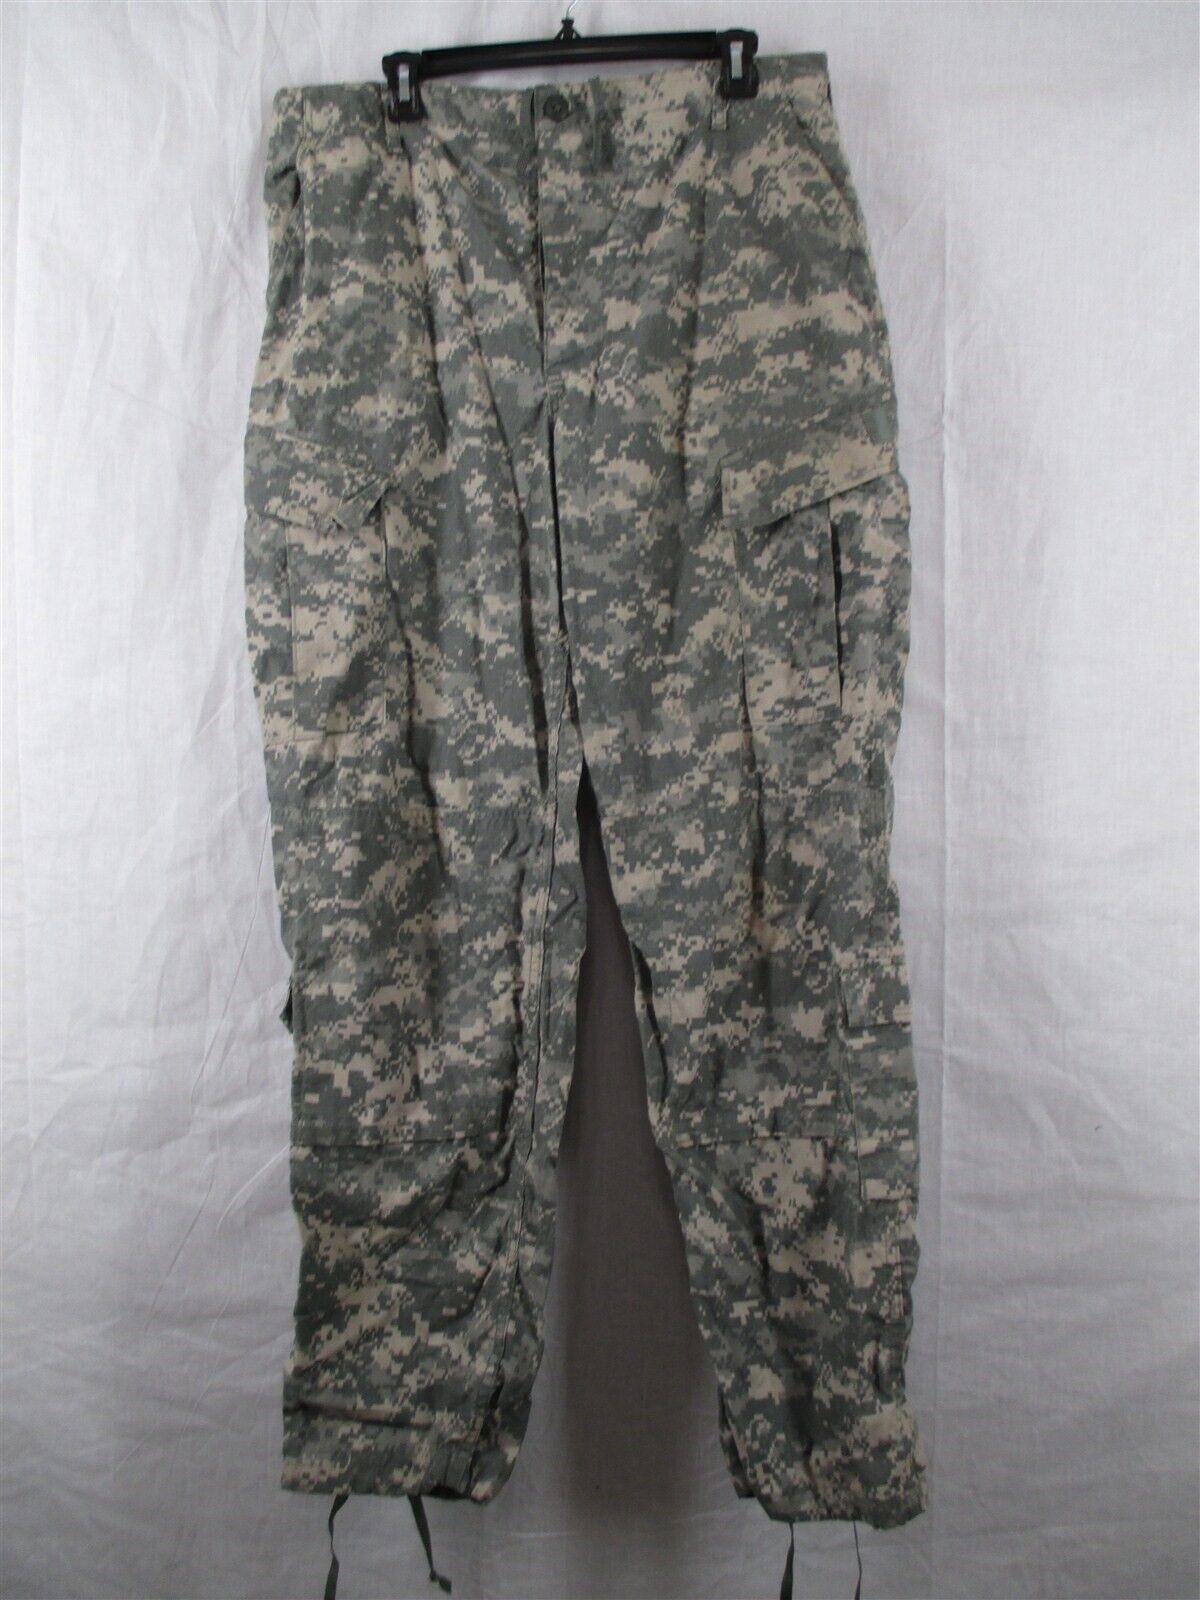 ACU Pants/Trousers Large Long USGI Digital Camo Flame Resistant FRACU Army